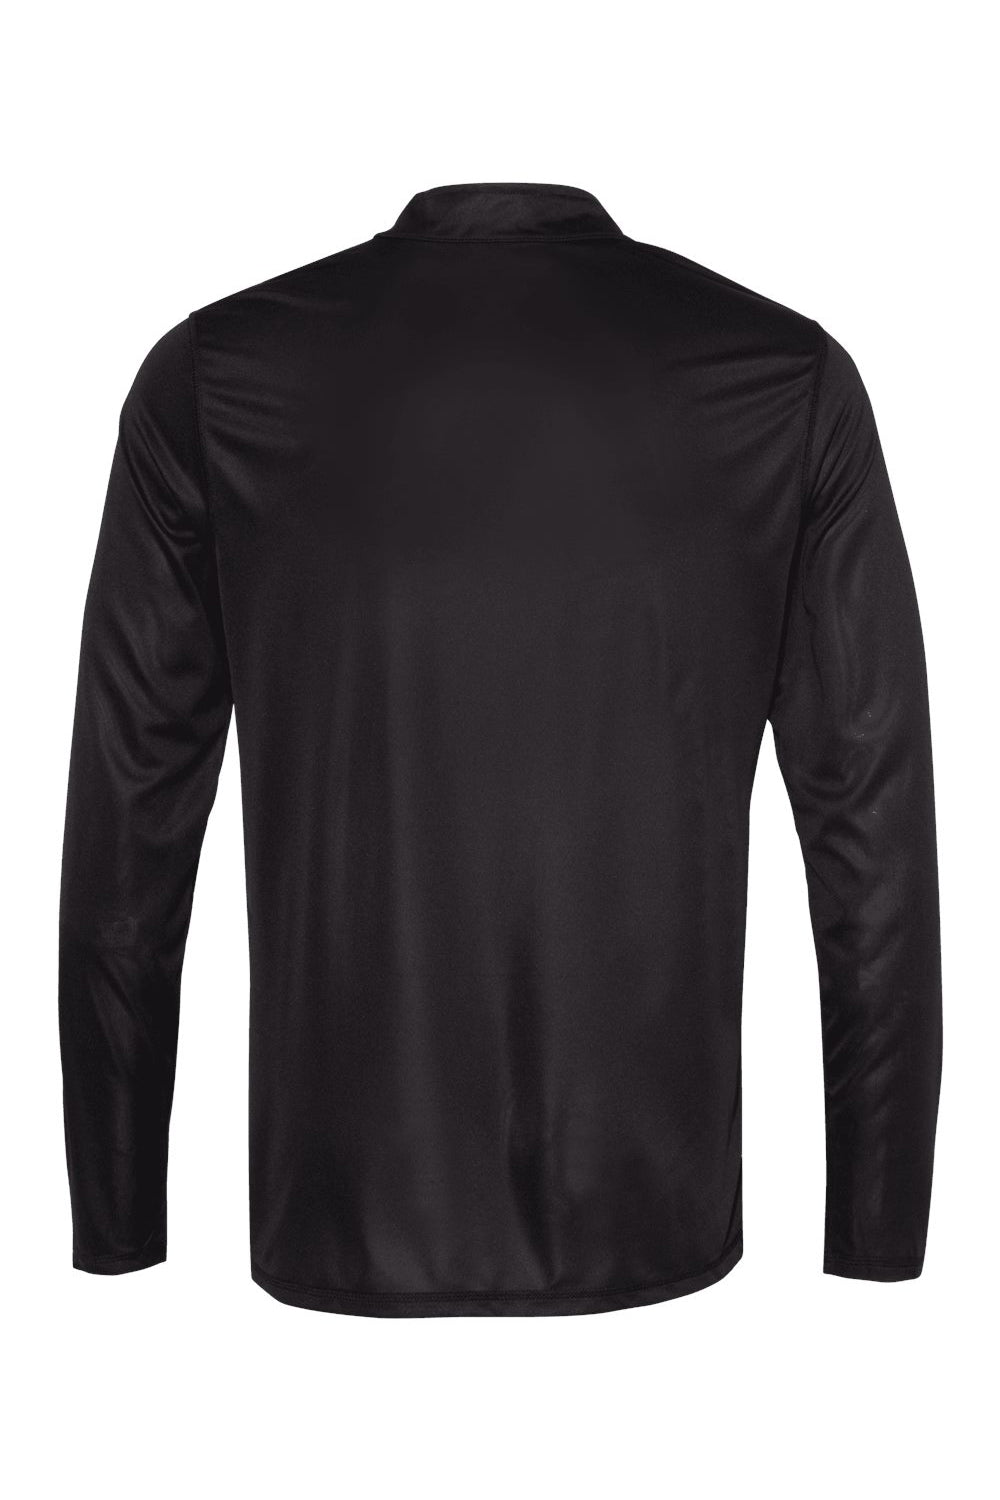 Augusta Sportswear 2785 Mens Attain Performance Moisture Wicking 1/4 Zip Sweatshirt Black Flat Back